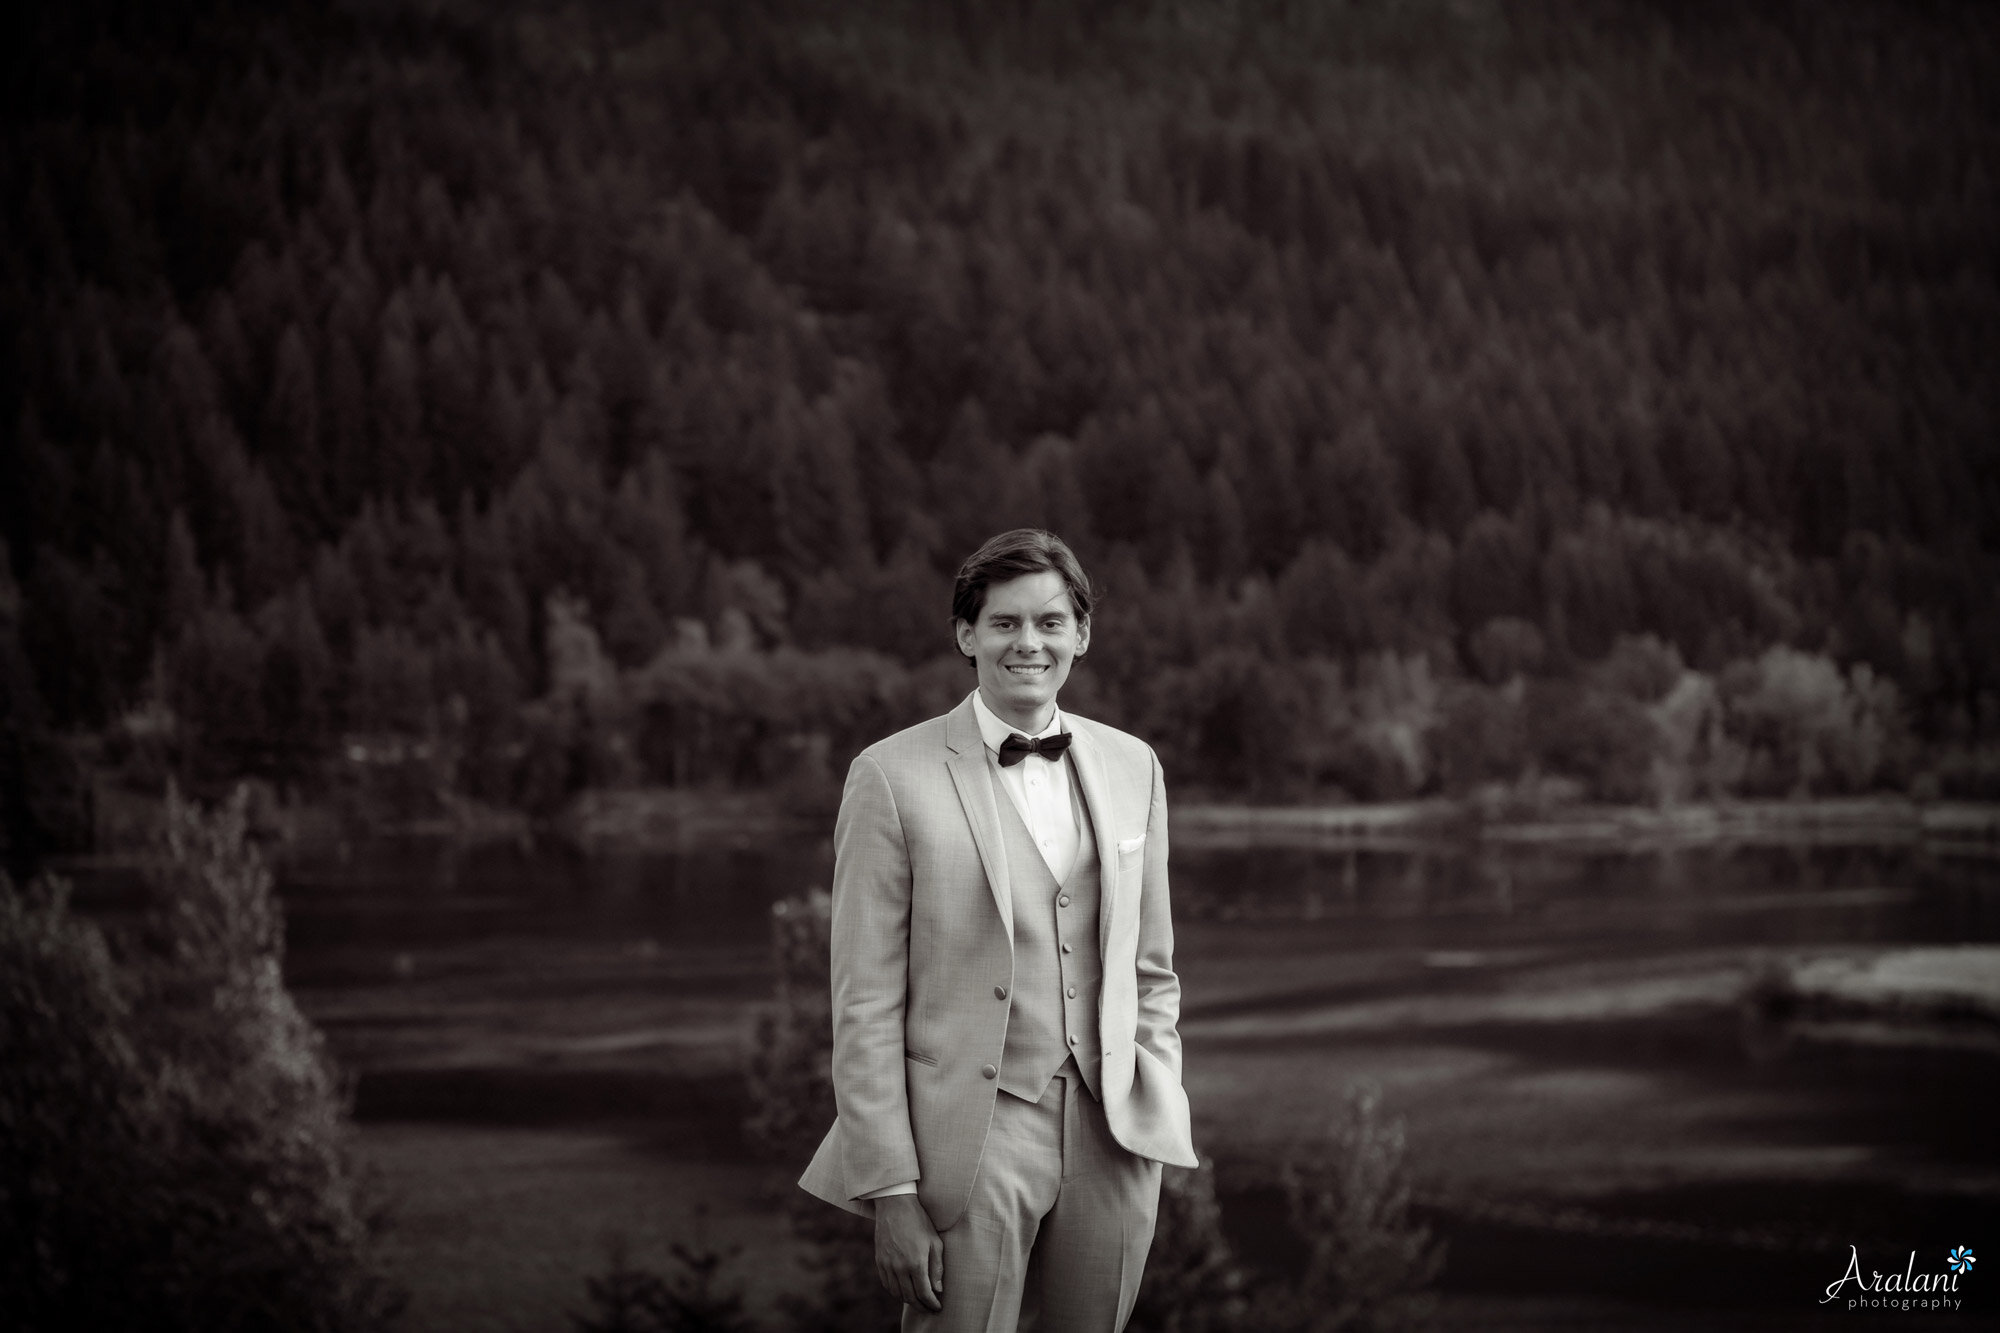 Courtney-Jimmy-028-Columbia-River-Gorge-Government-Cove-Latourell-Falls-Oregon-Wedding-Elopement-Photographer-Aralani-Photography-Courtney_Jimmy_W0218.jpg